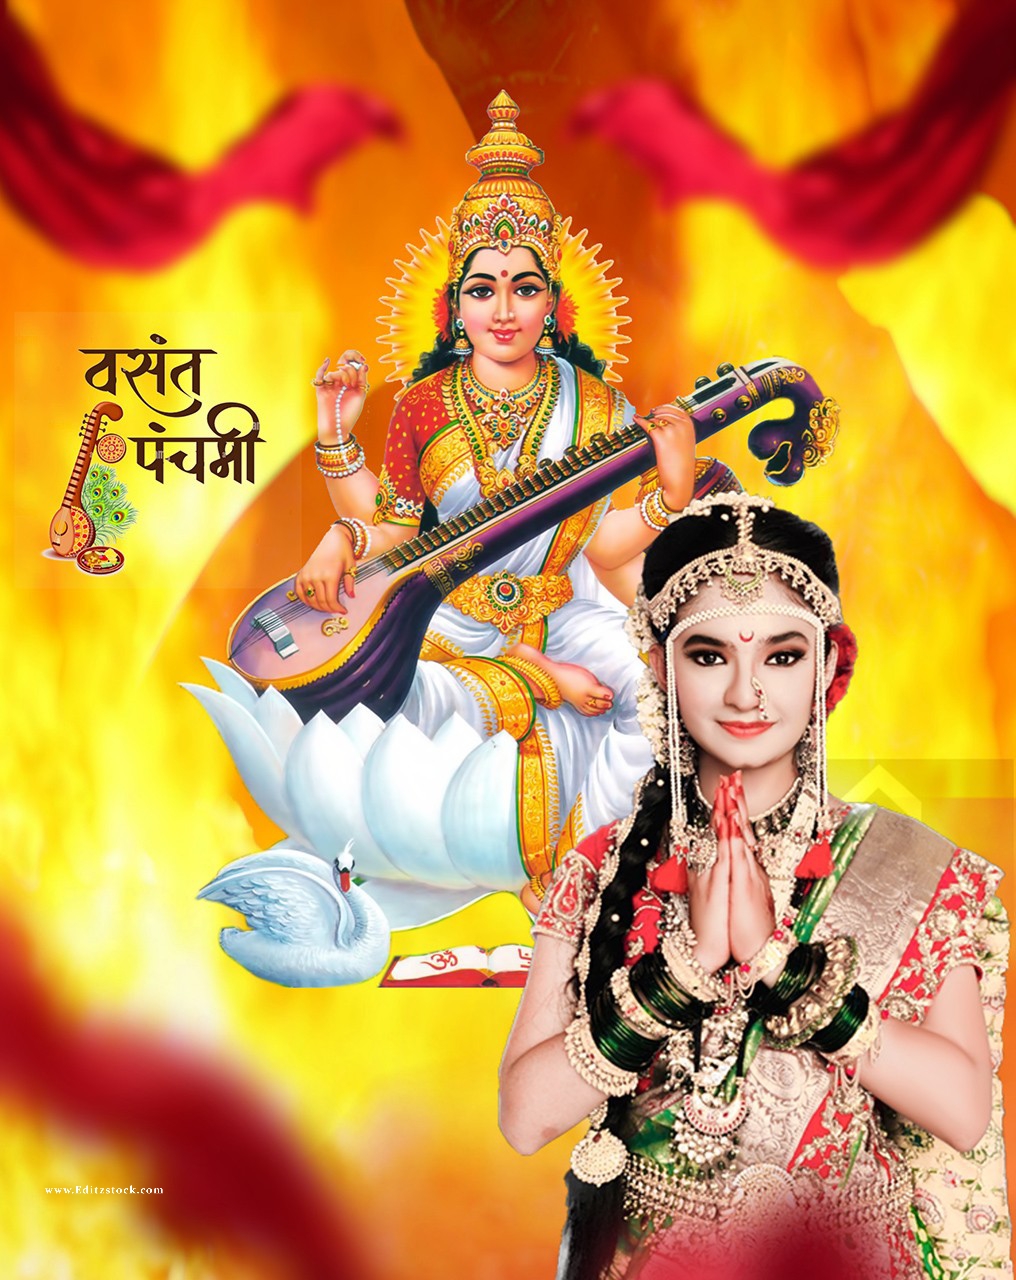 saraswati puja ke background 2022 with girl Anuskha sen full hd banner poster for cb picsart